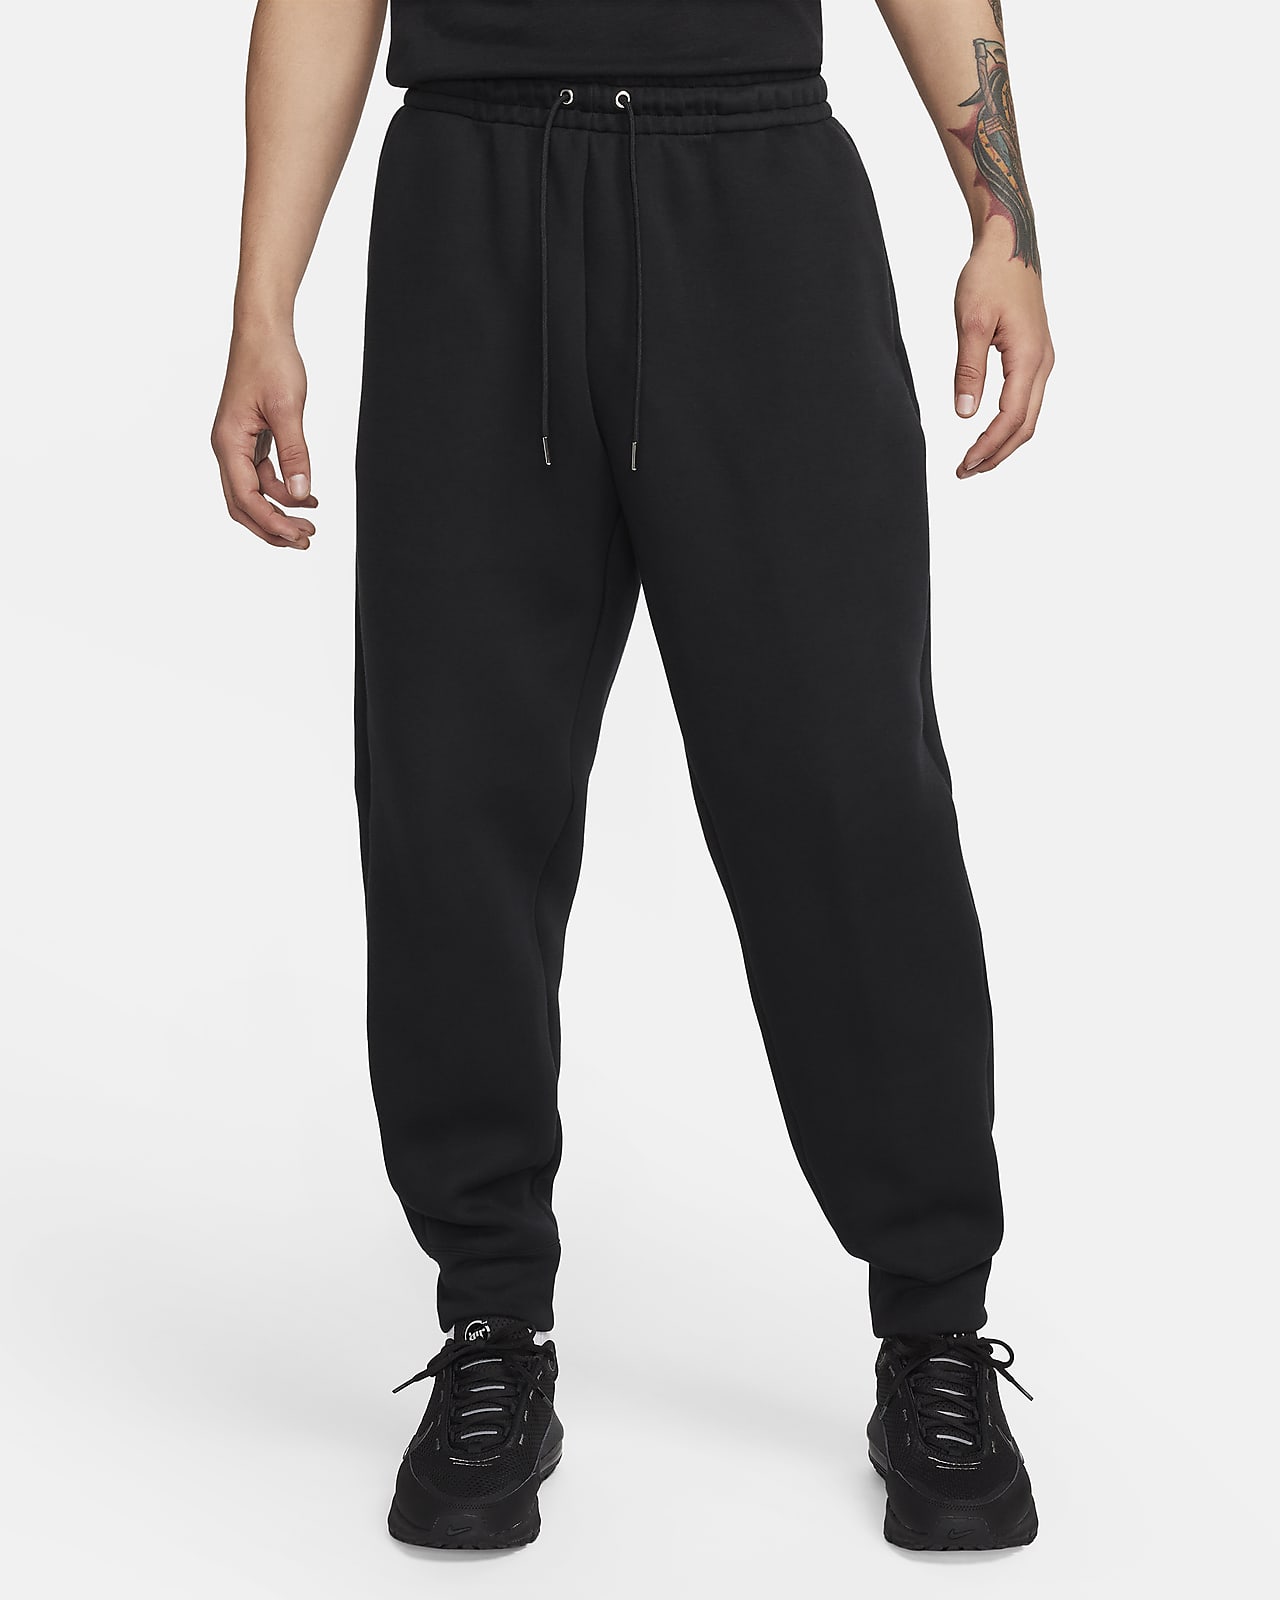 NEW Nike Tech Fleece Pants GIRLS SIZE 6X Sportswear BLACK WHITE 6